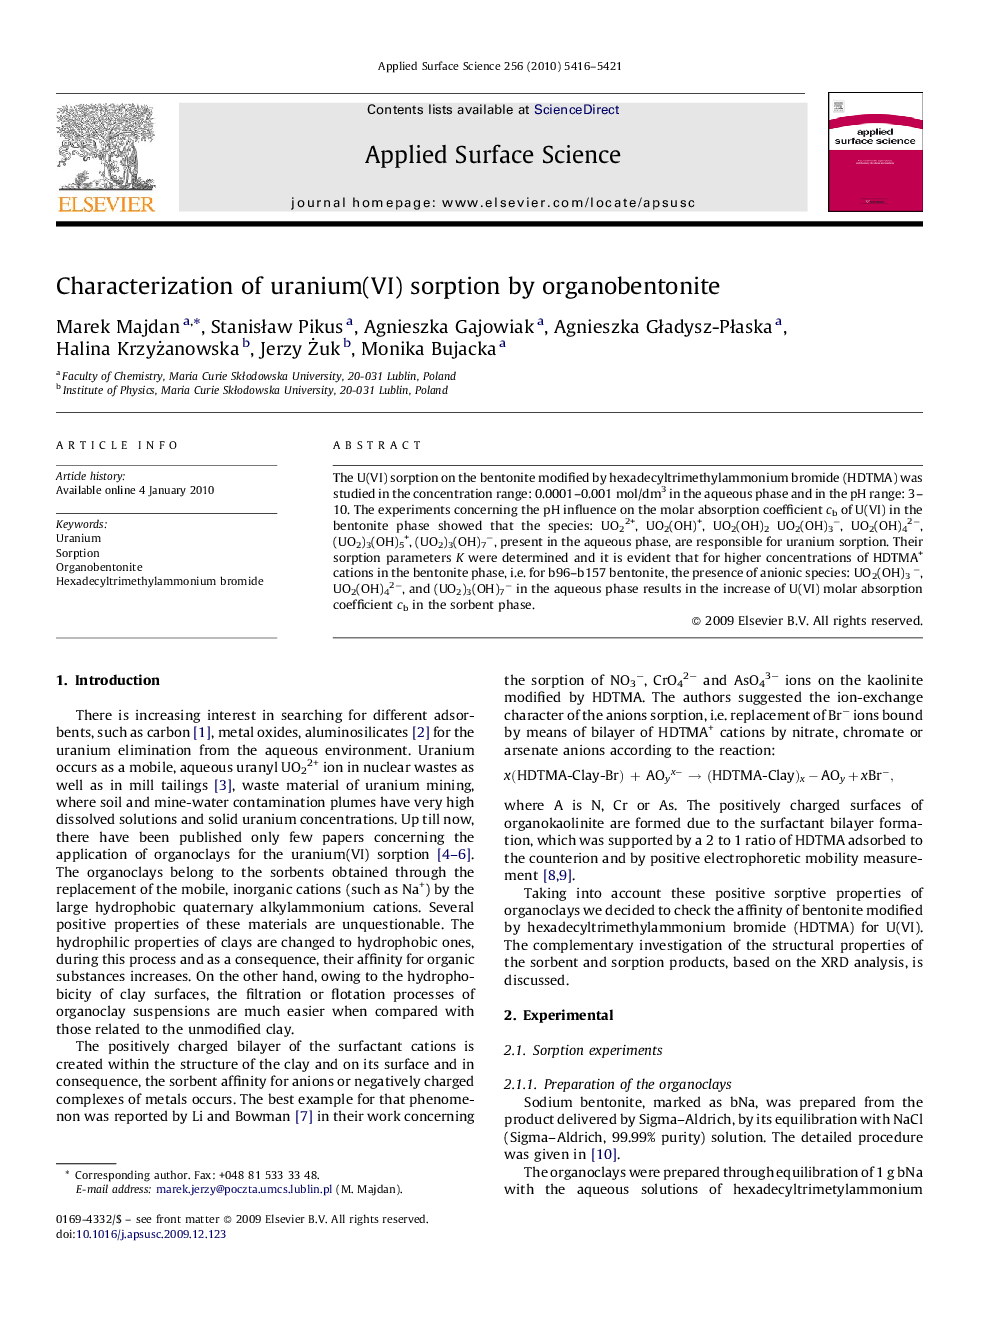 Characterization of uranium(VI) sorption by organobentonite